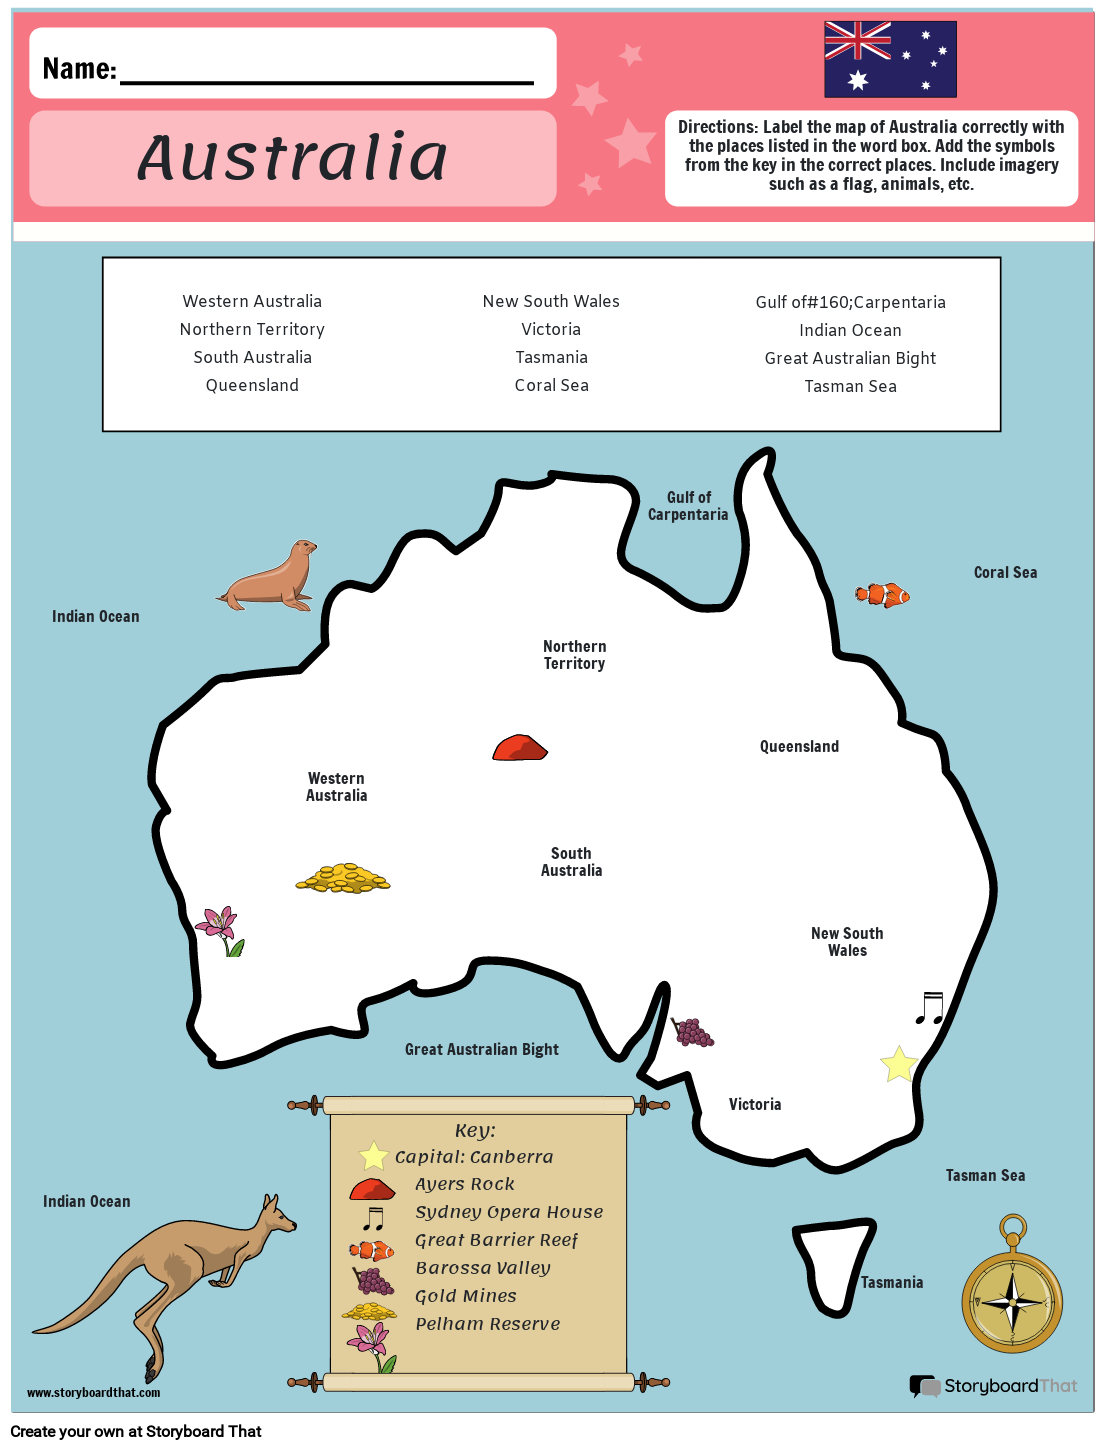 मानचित्र वर्कशीट उदाहरण ऑस्ट्रेलिया